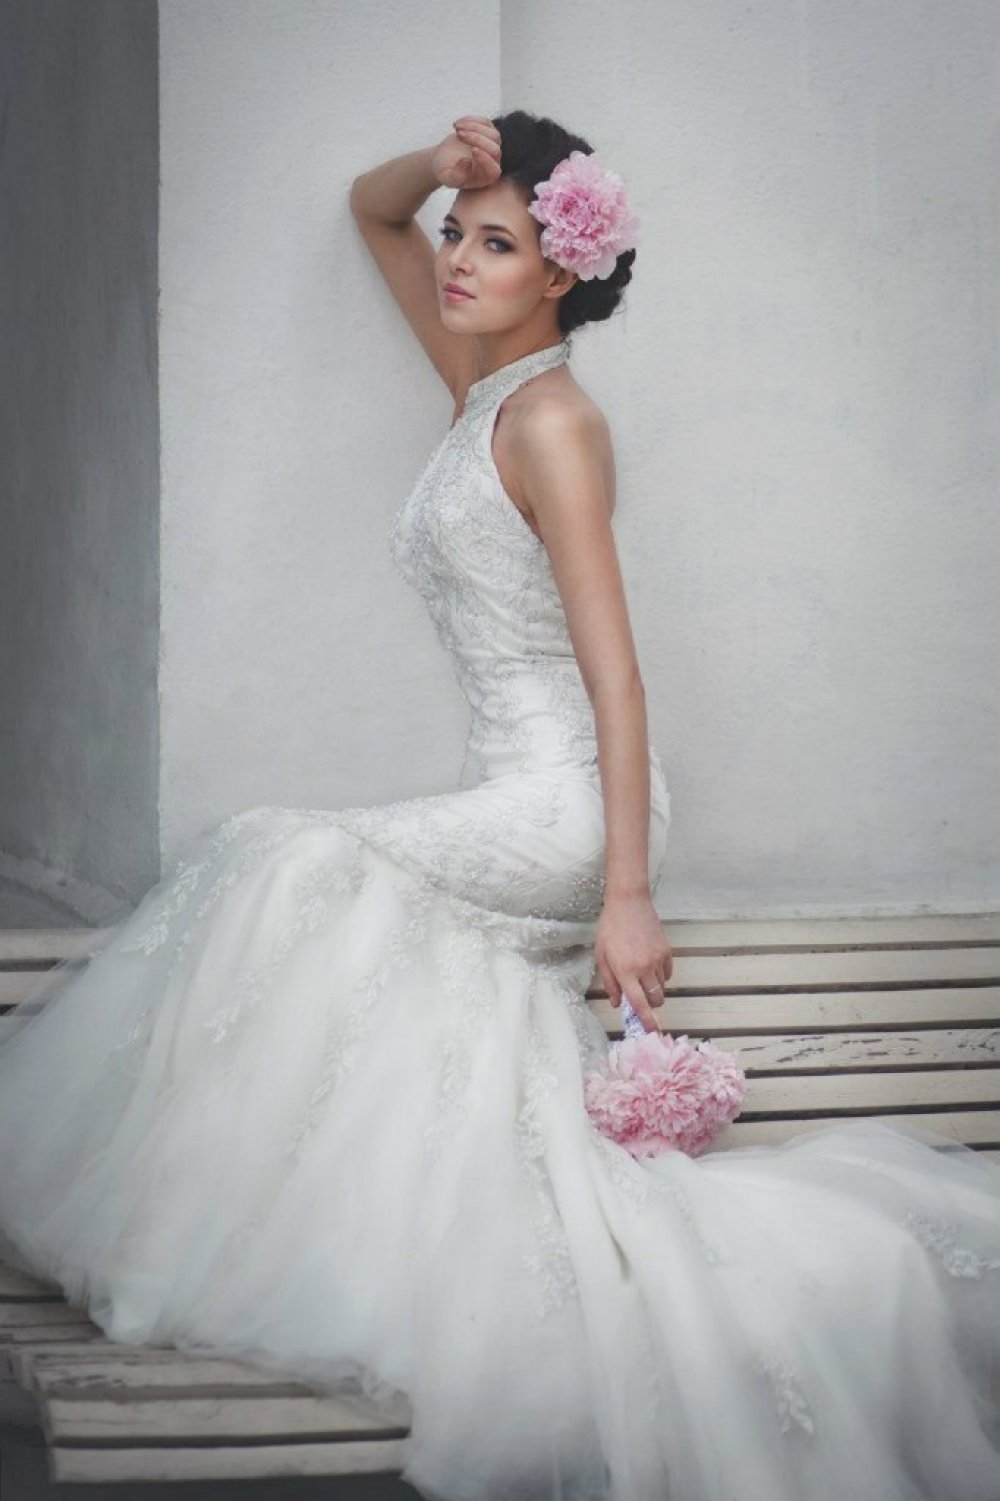 Прическа, визаж невесты - стилист Лариса Костина